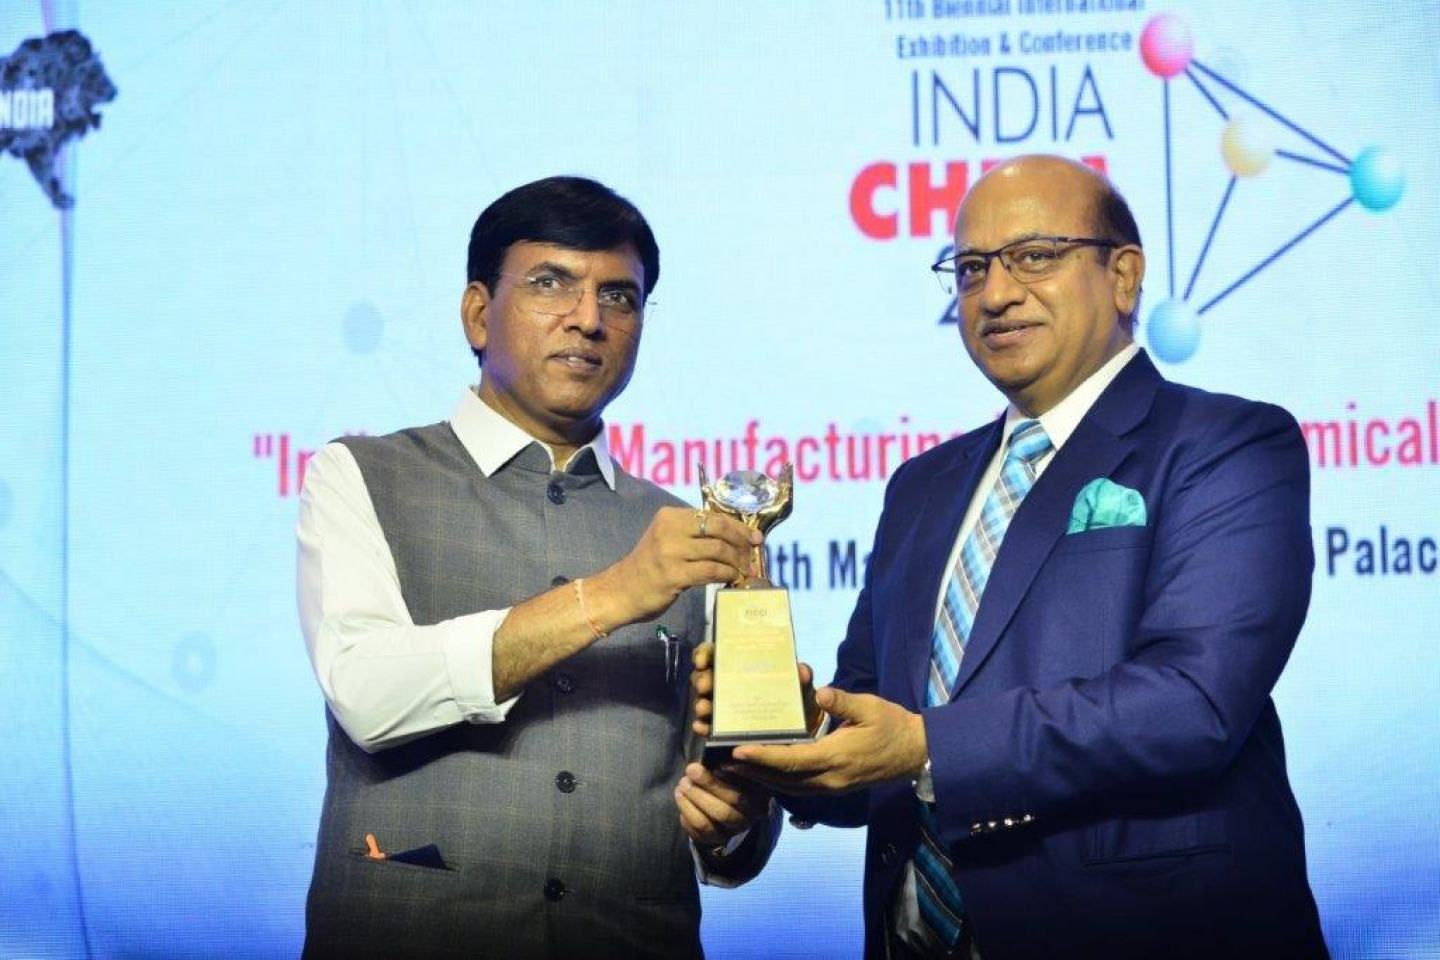 FMC India named Digital enabled company